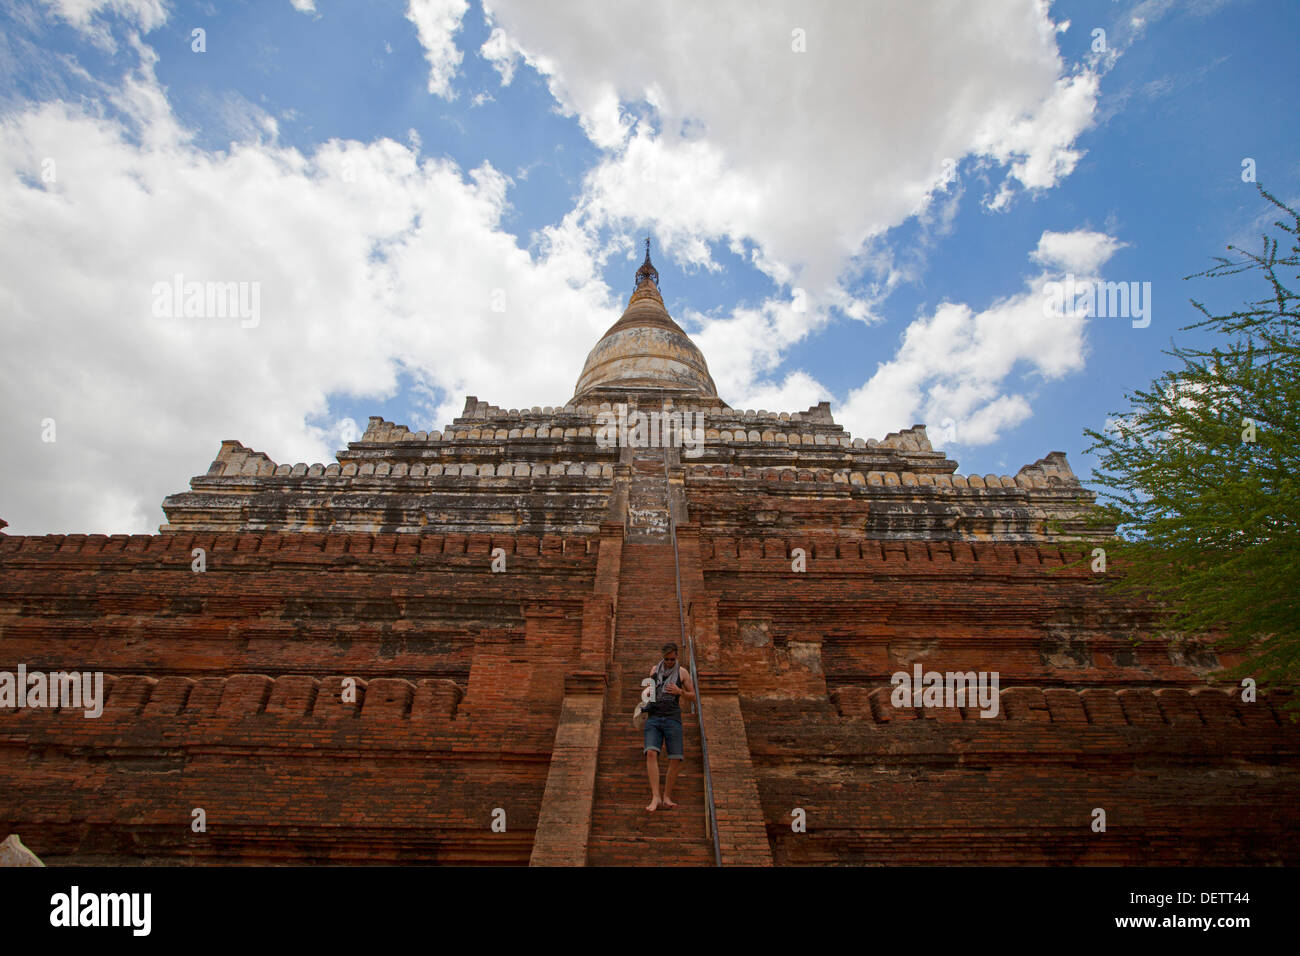 Un hombre camina por un templo en Bagan, Birmania. Foto de stock